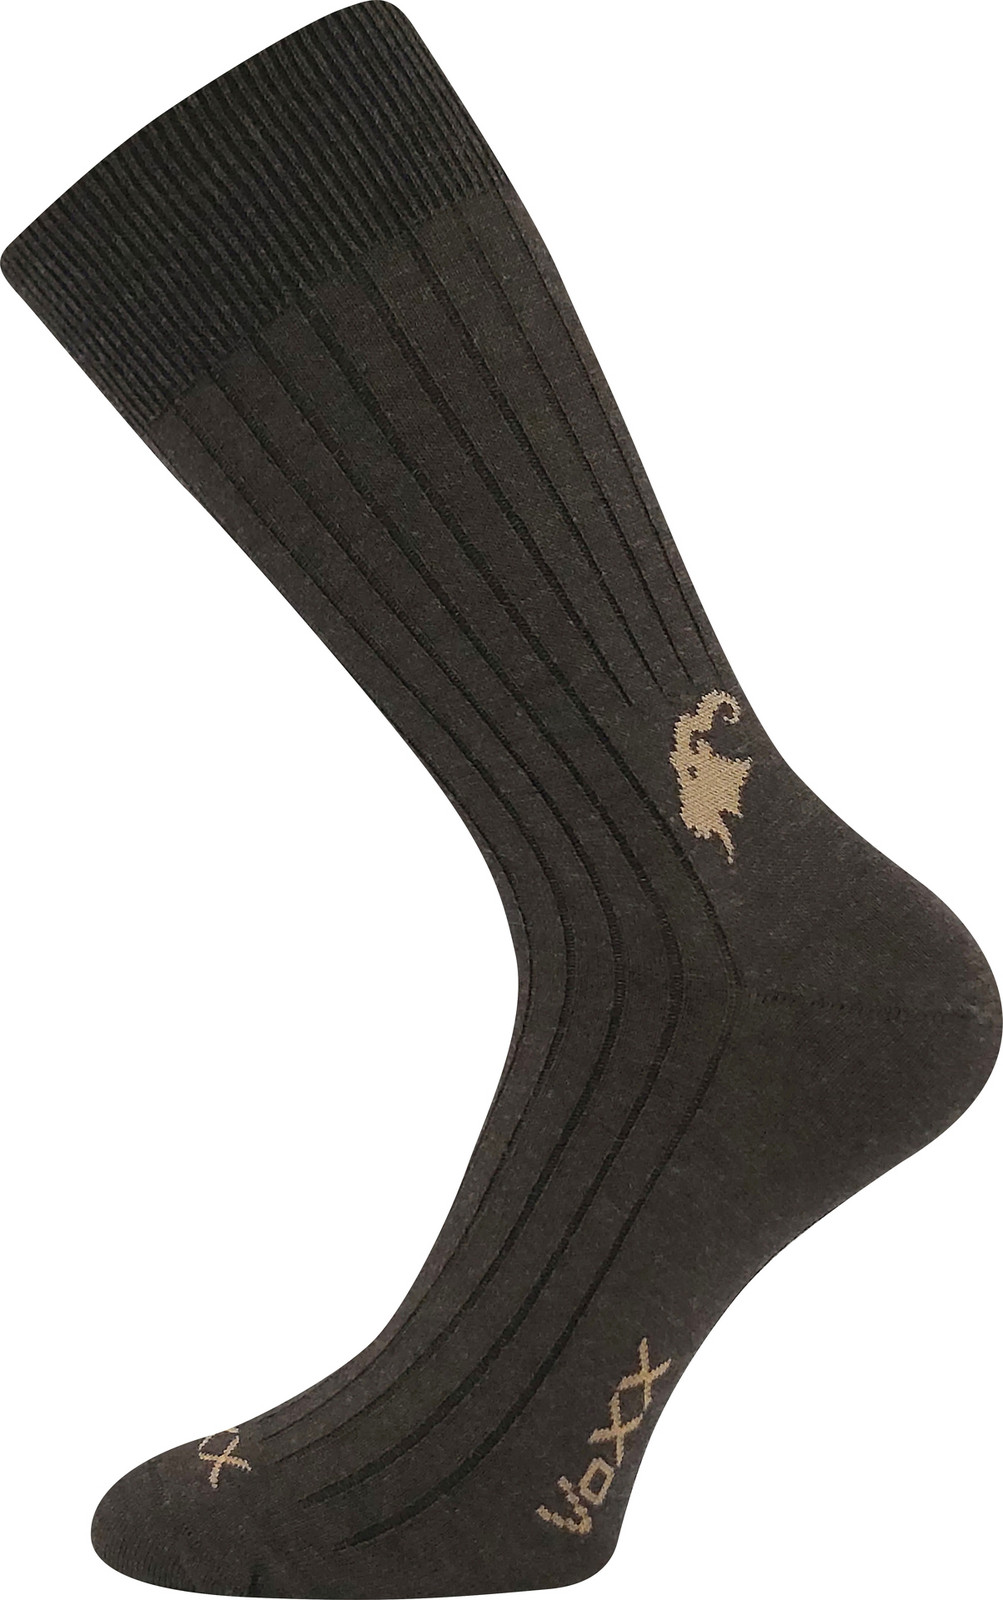 VOXX® ponožky Cashmere love tm.hnědá 3 pár 39-42 120984